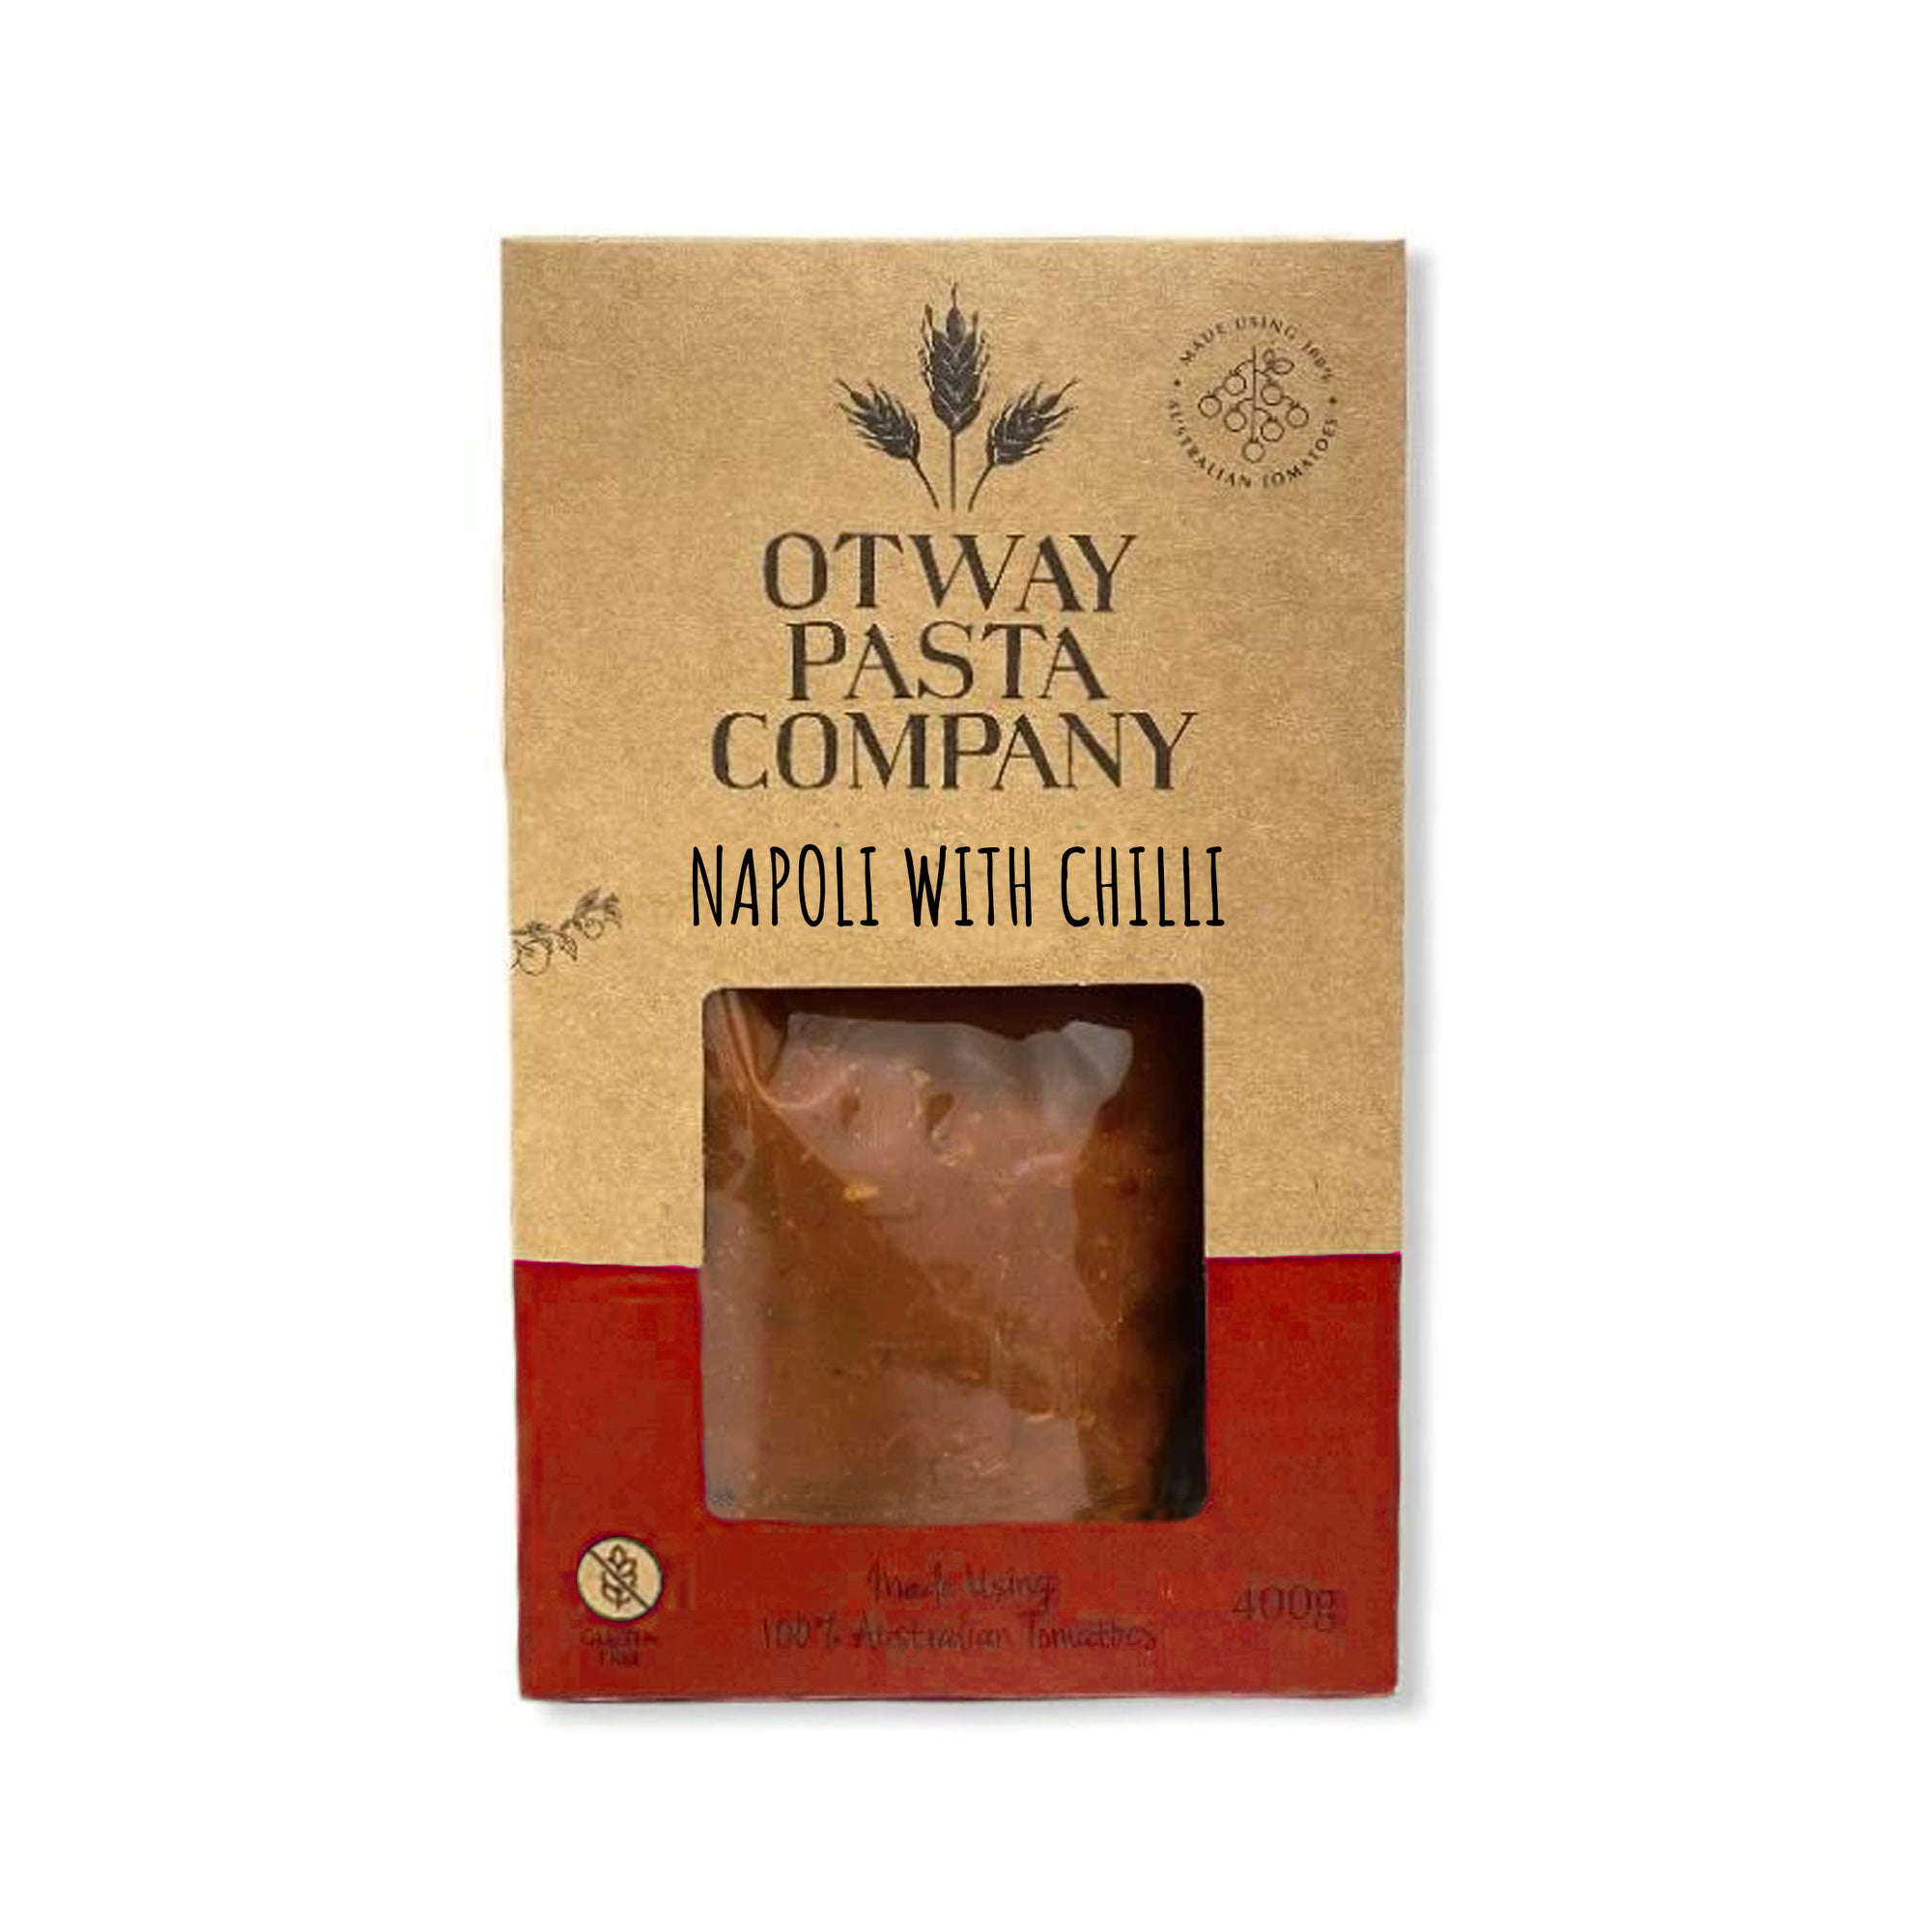 Otway Pasta Company - Napoli with Chilli - 400g